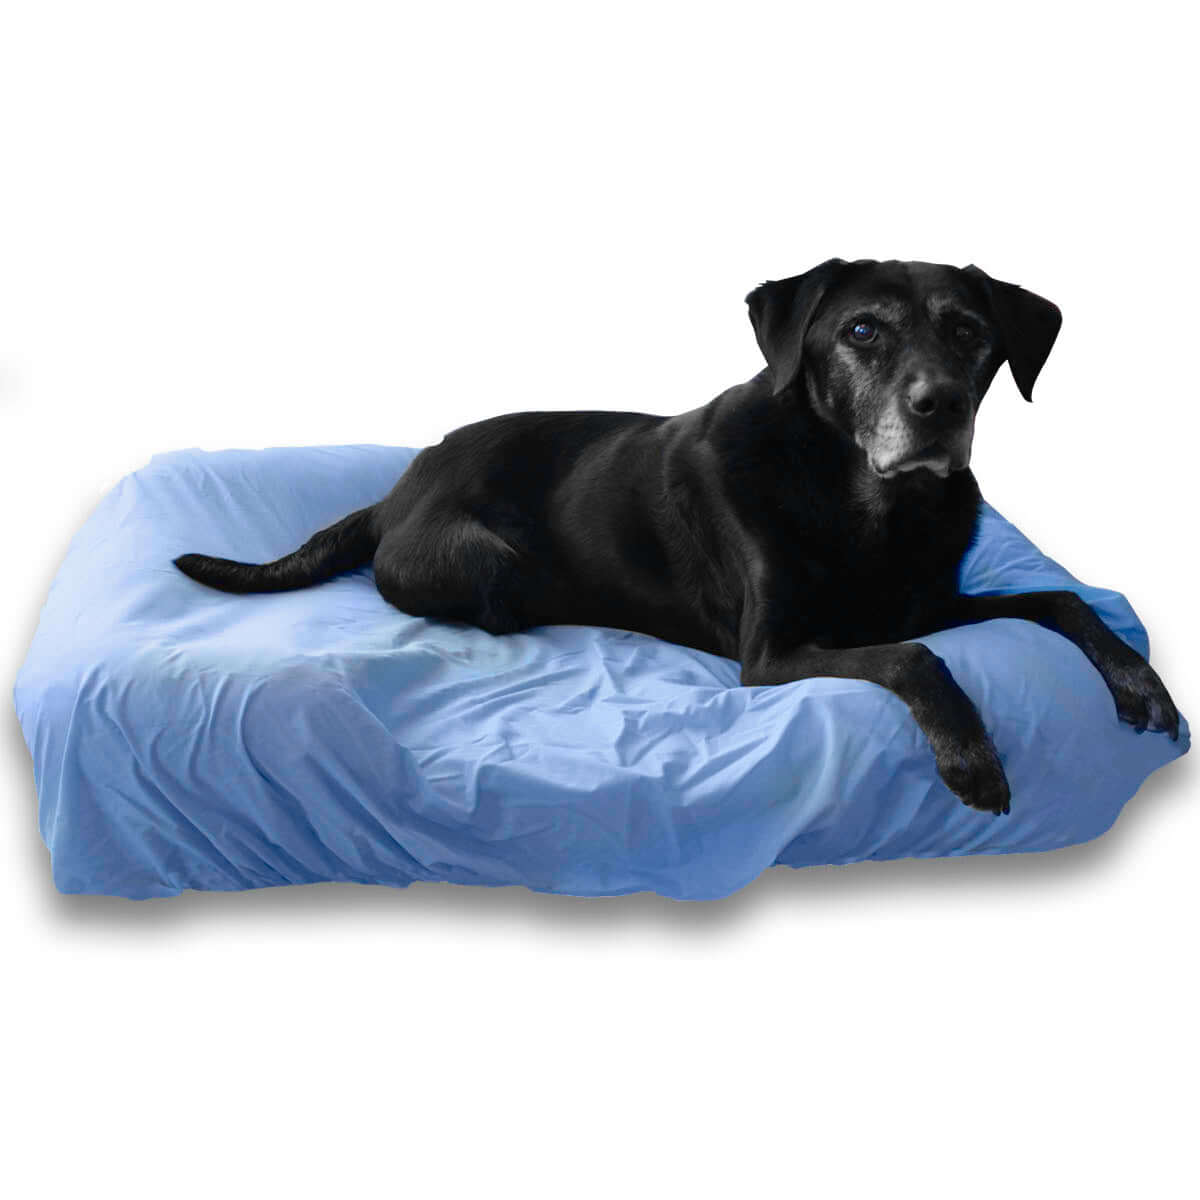 PawSheets Light Blue Dog Bed Sheet on Large Pet Fusion Dog Bed